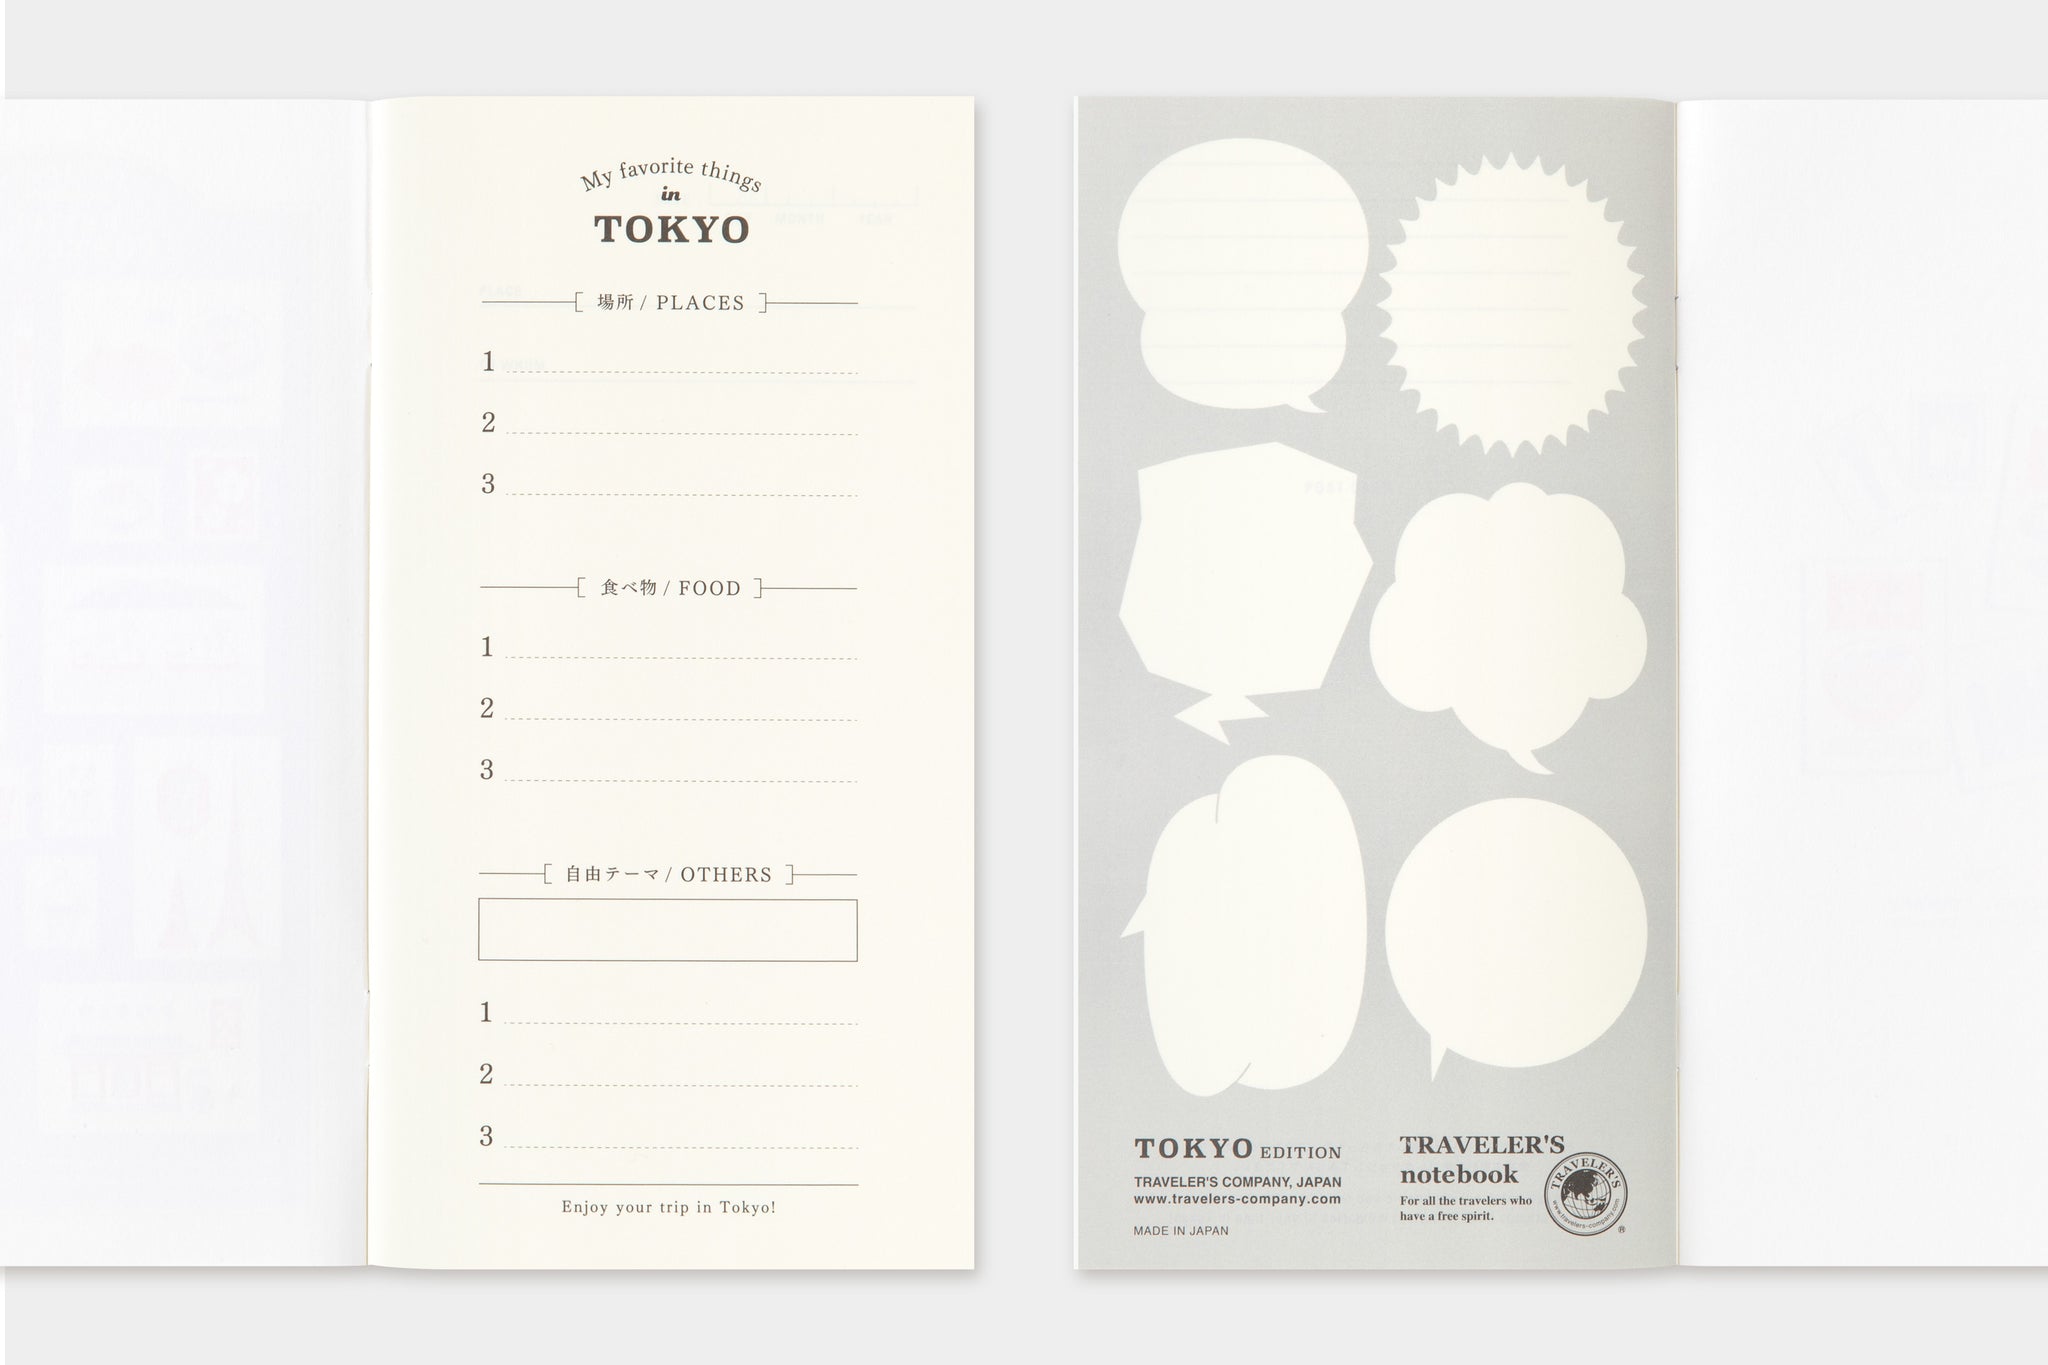 TRAVELER'S COMPANY - TRAVELER'S Refill Postcard (Tokyo Edition)